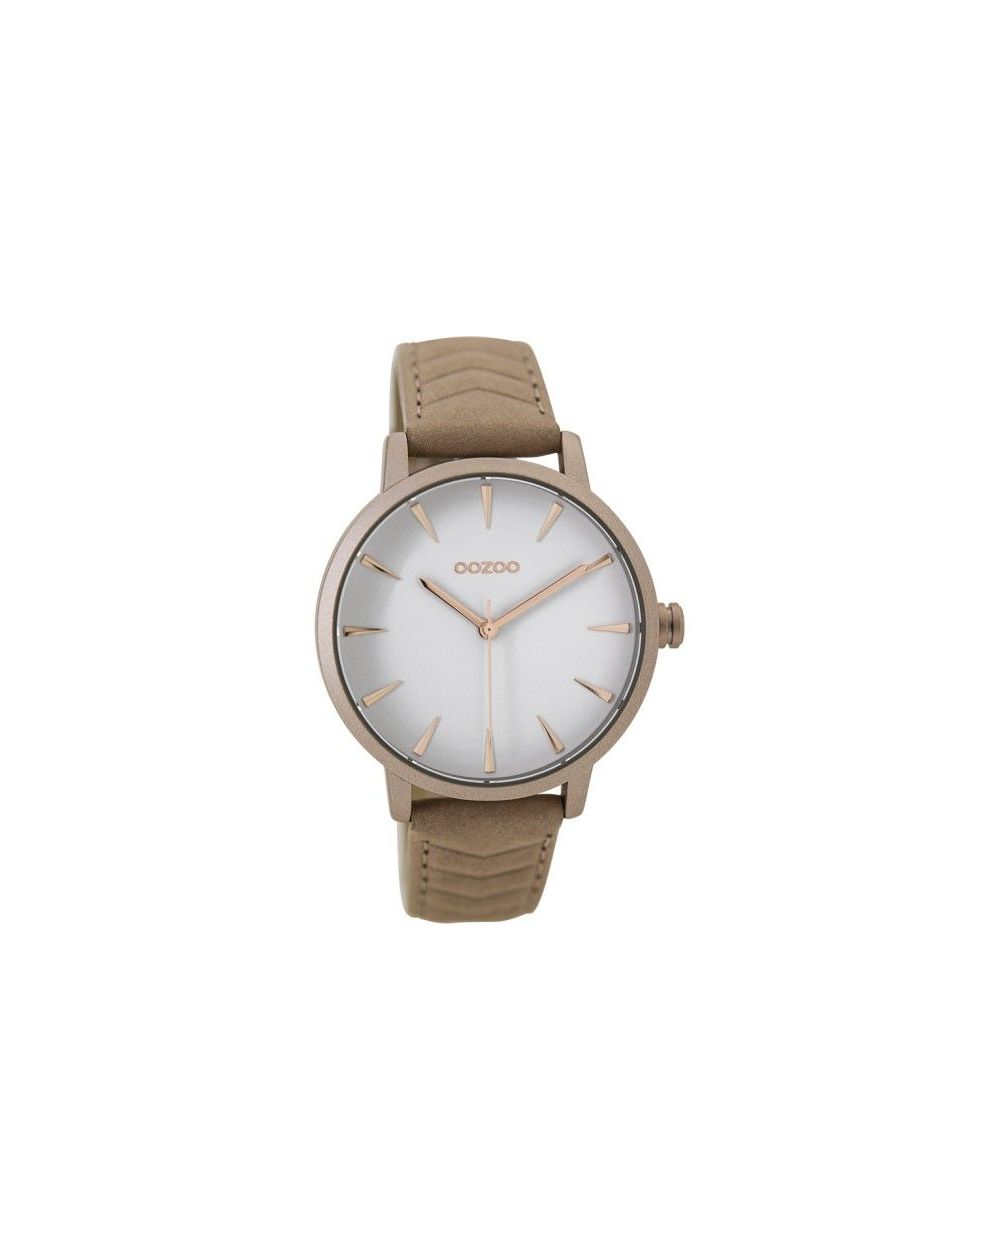 Montre Oozoo Timepieces C9507 - Marque de montre Oozoo